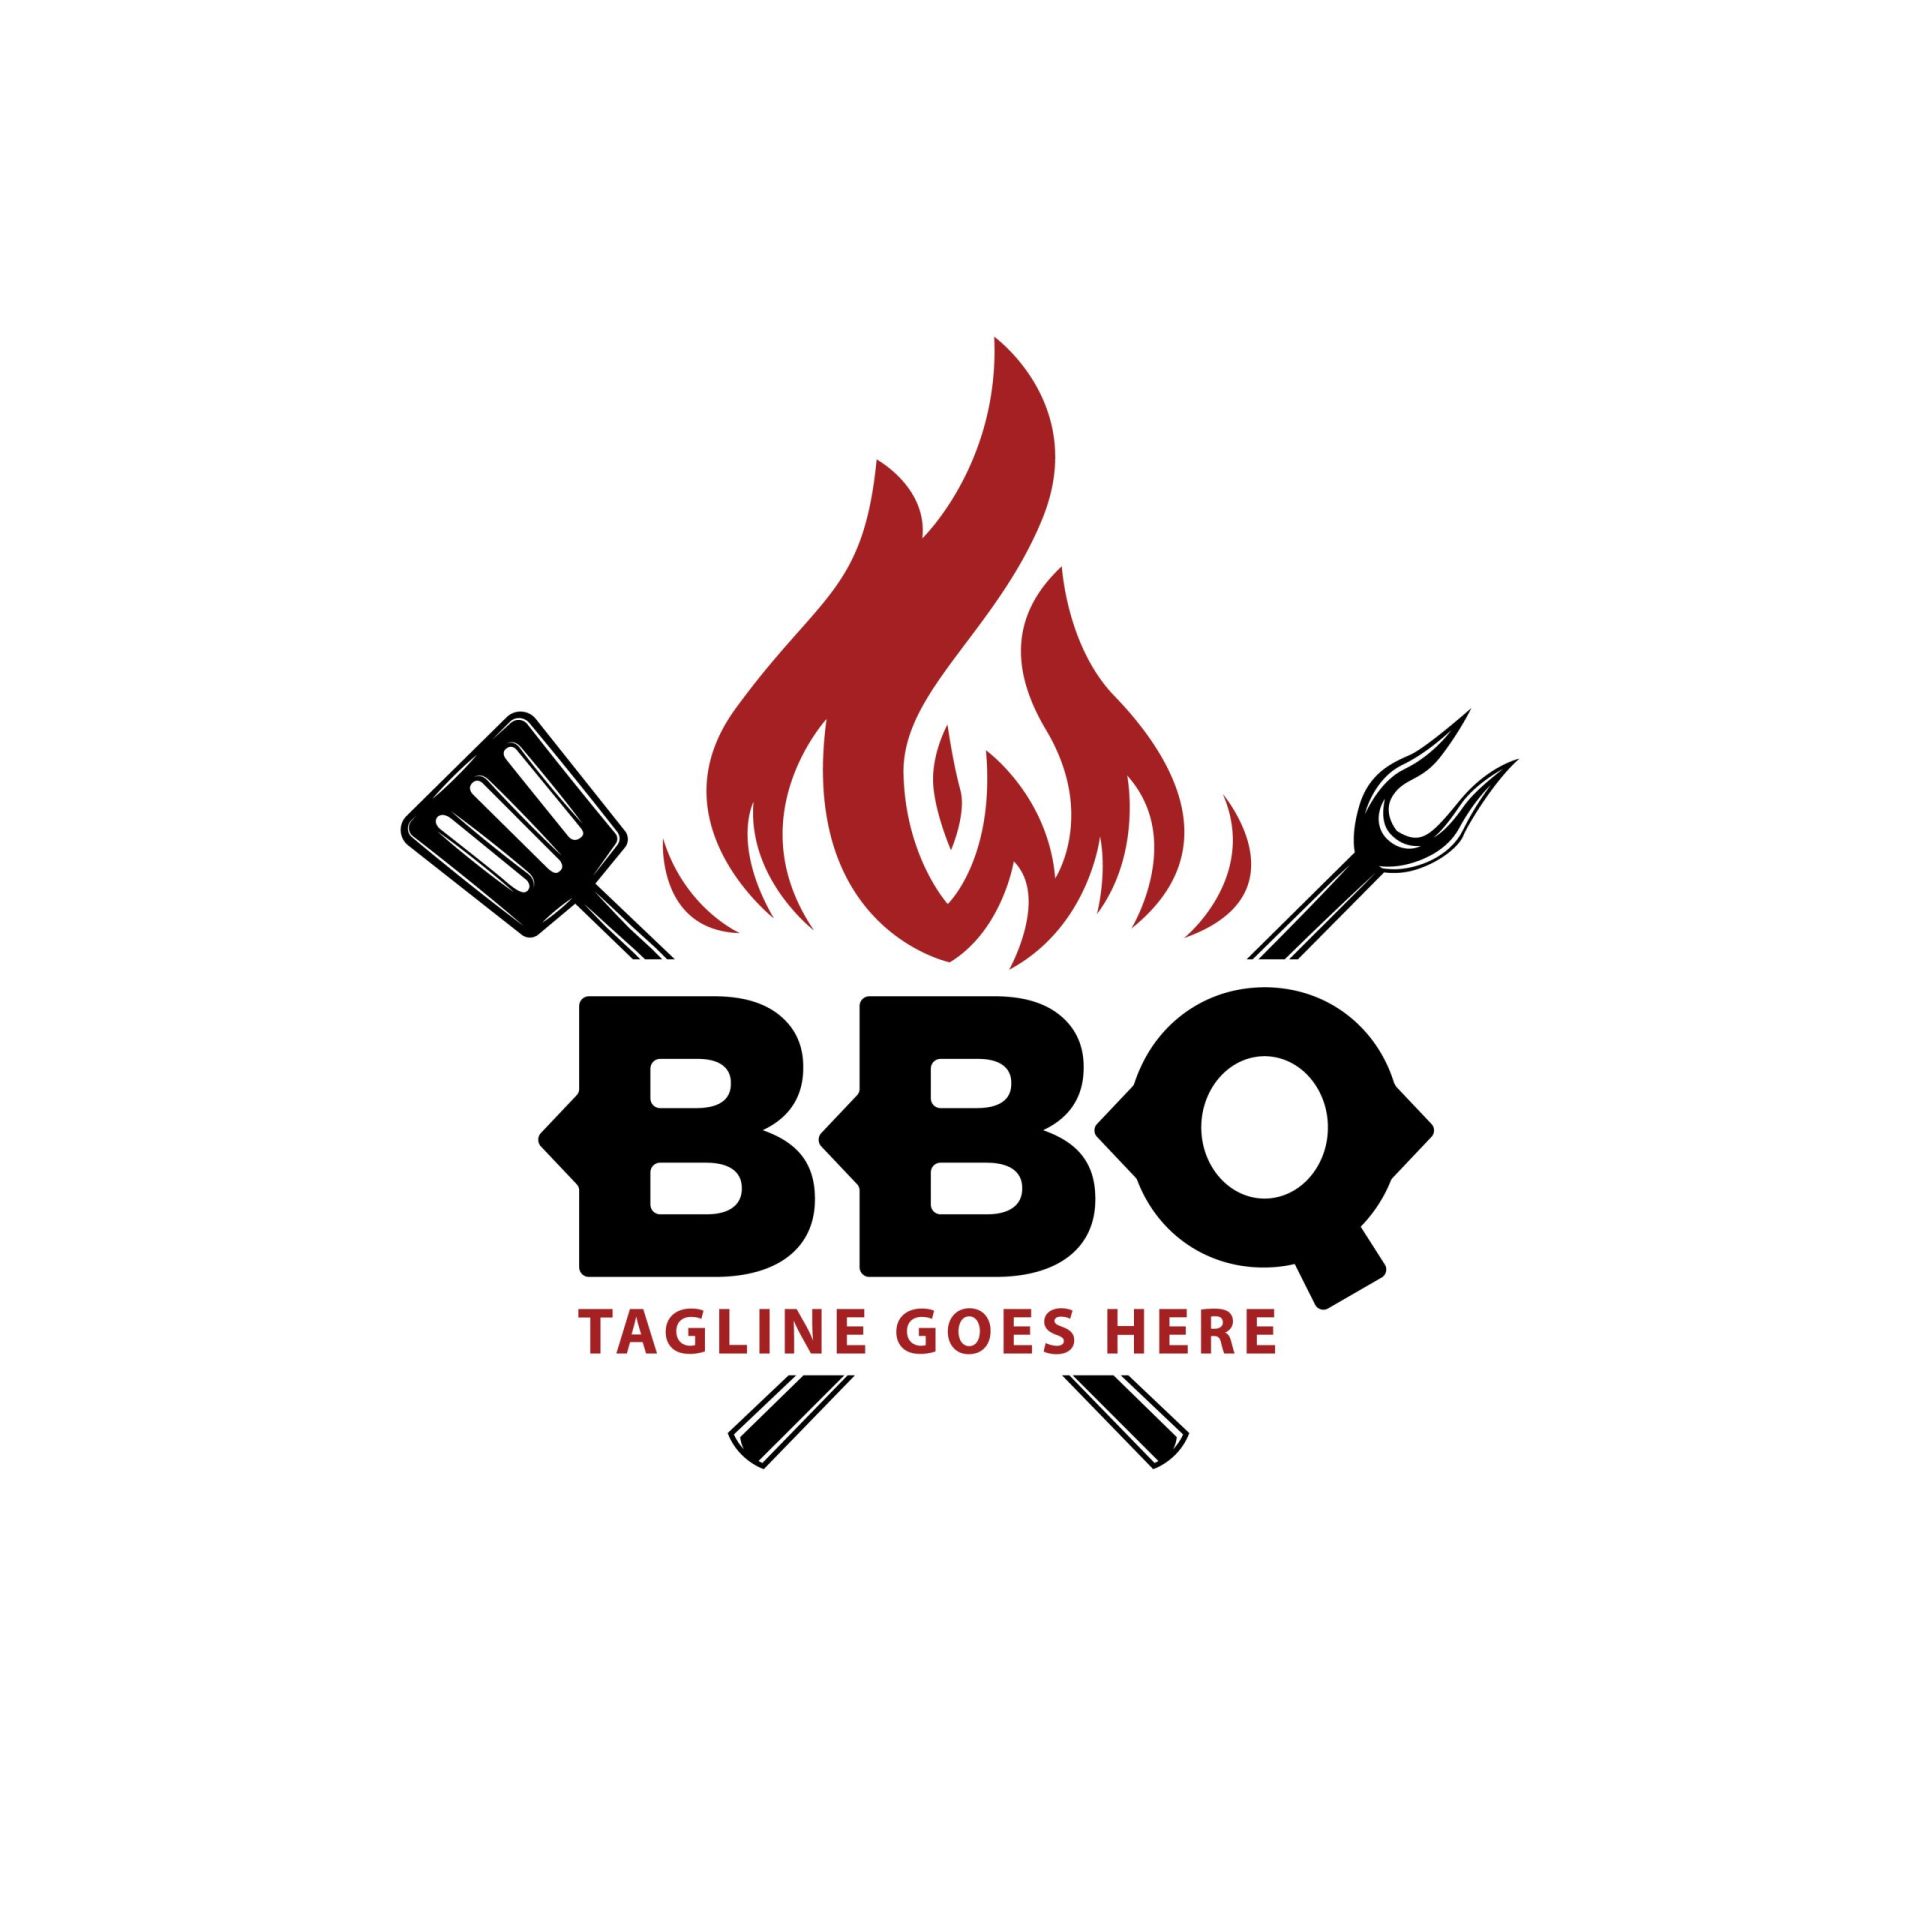 bbq logo ideas 2